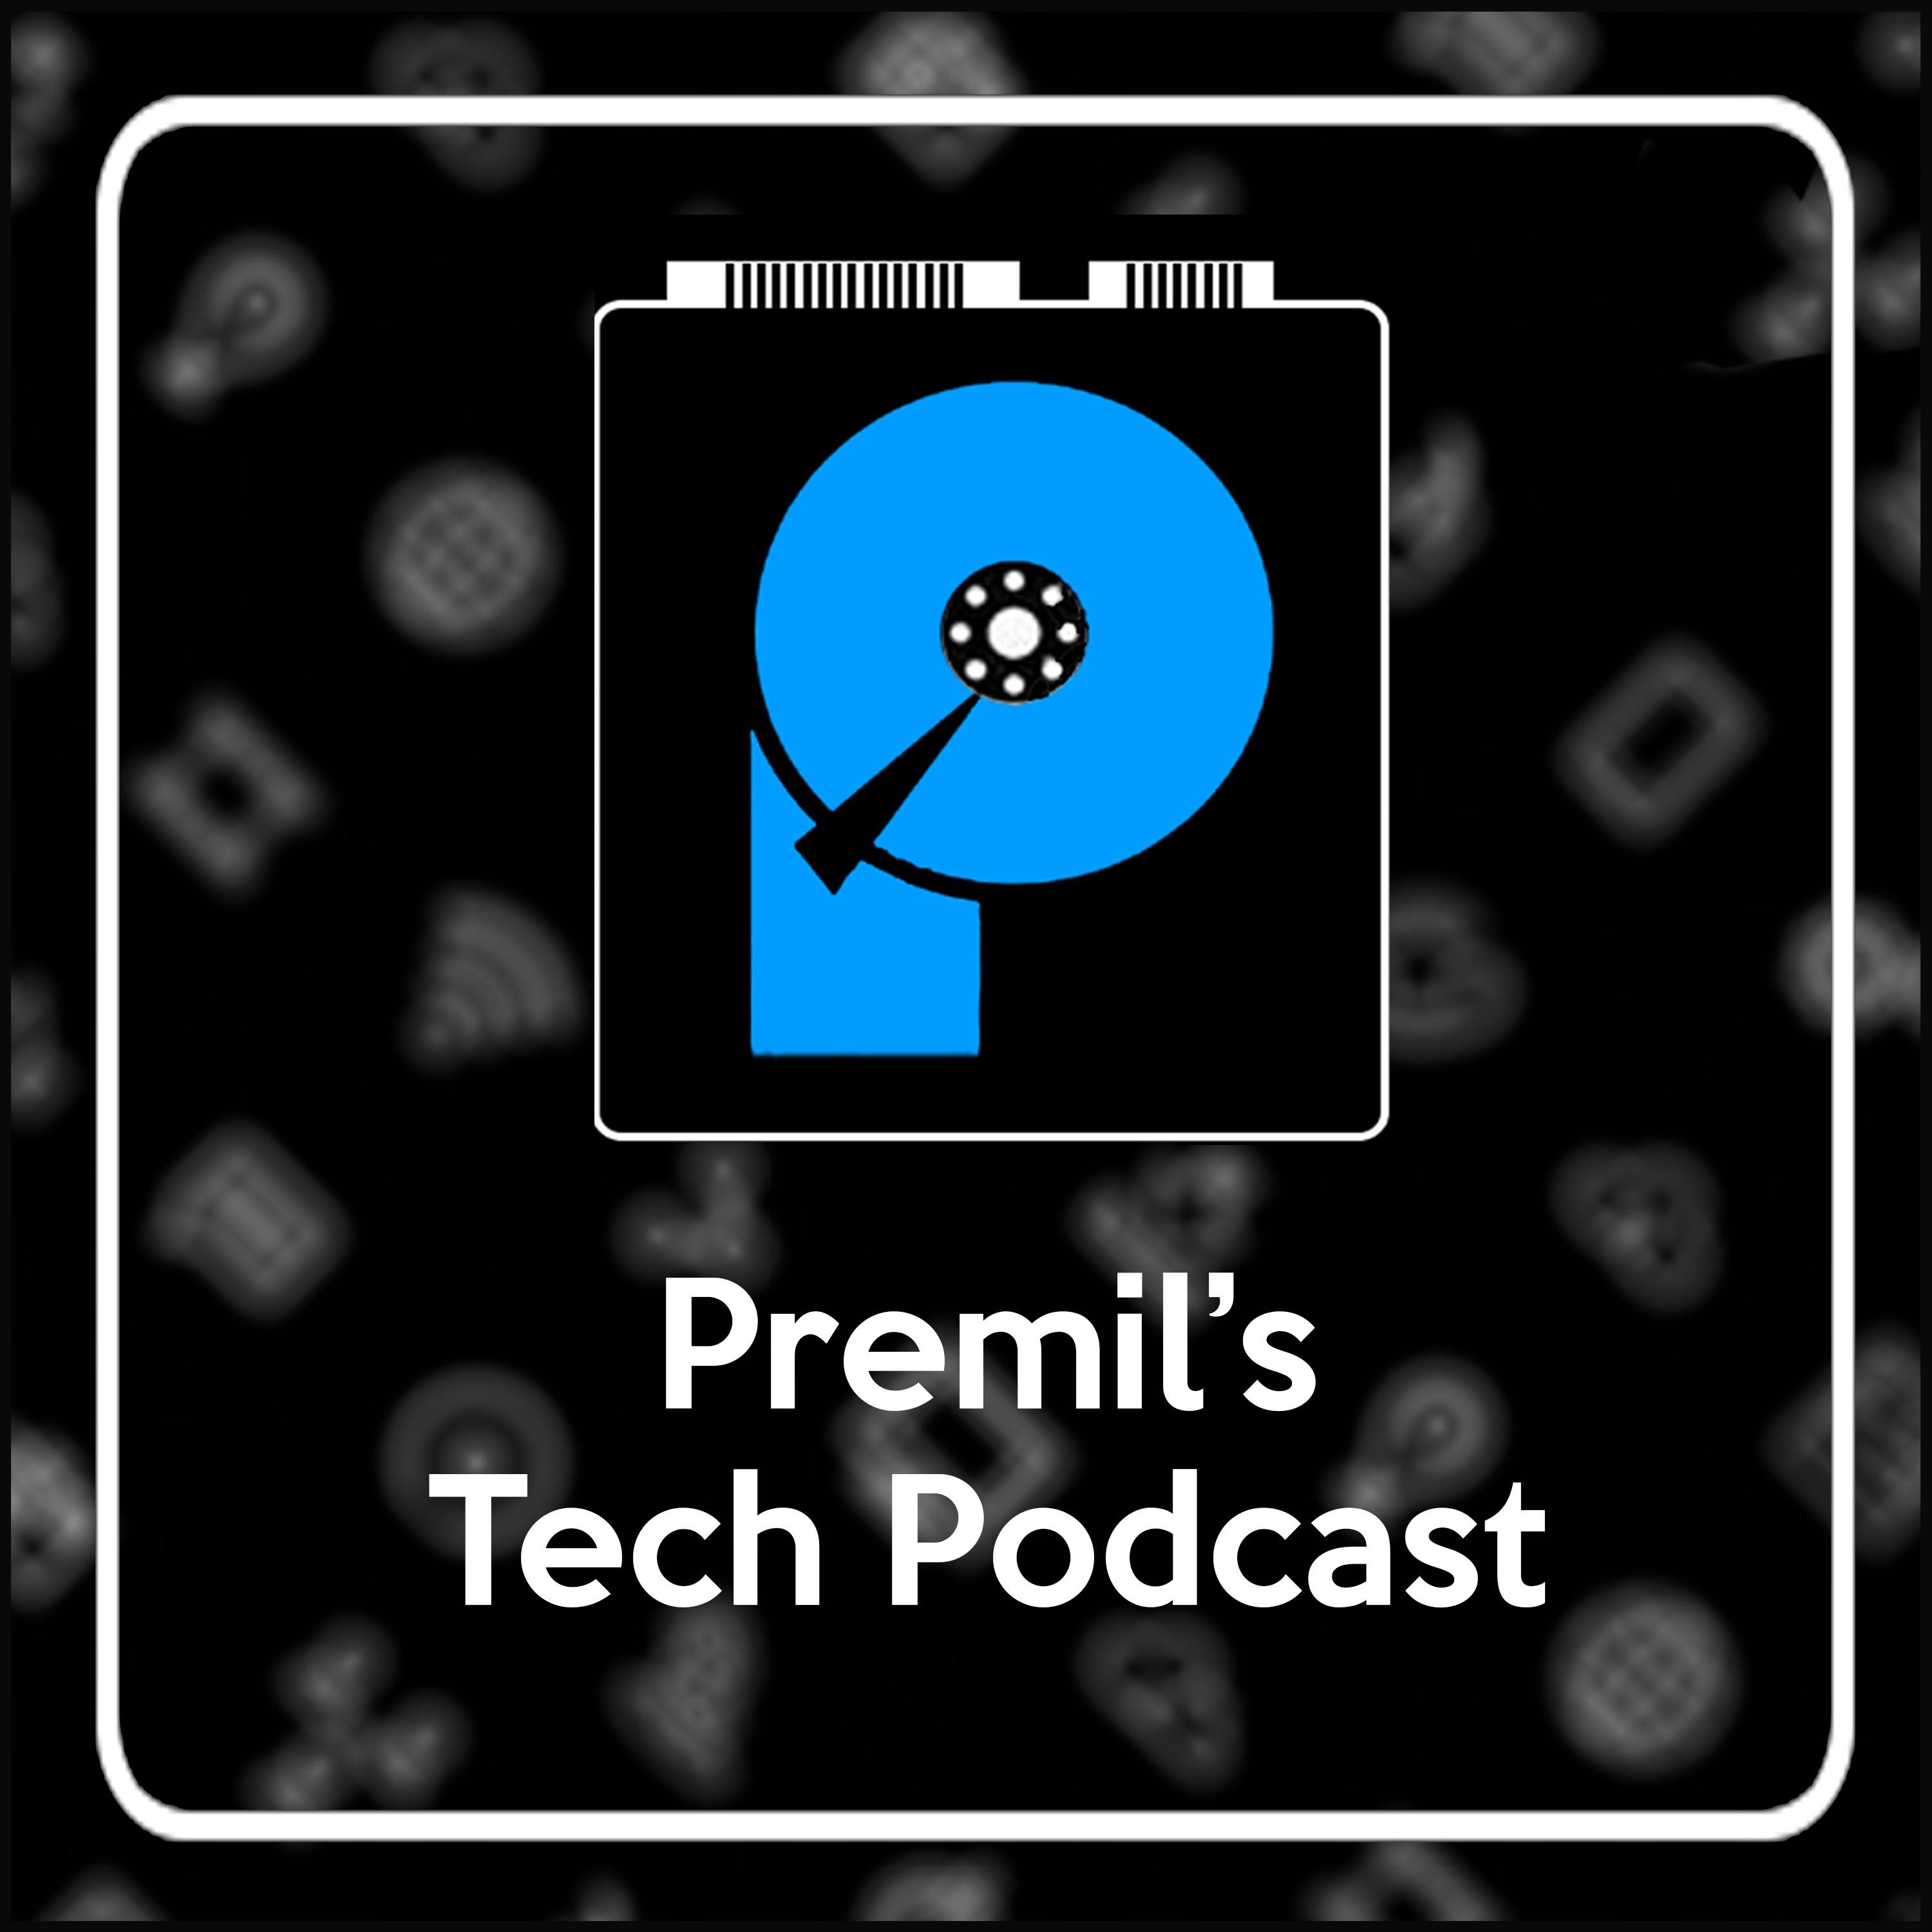 Premil's Tech Podcast